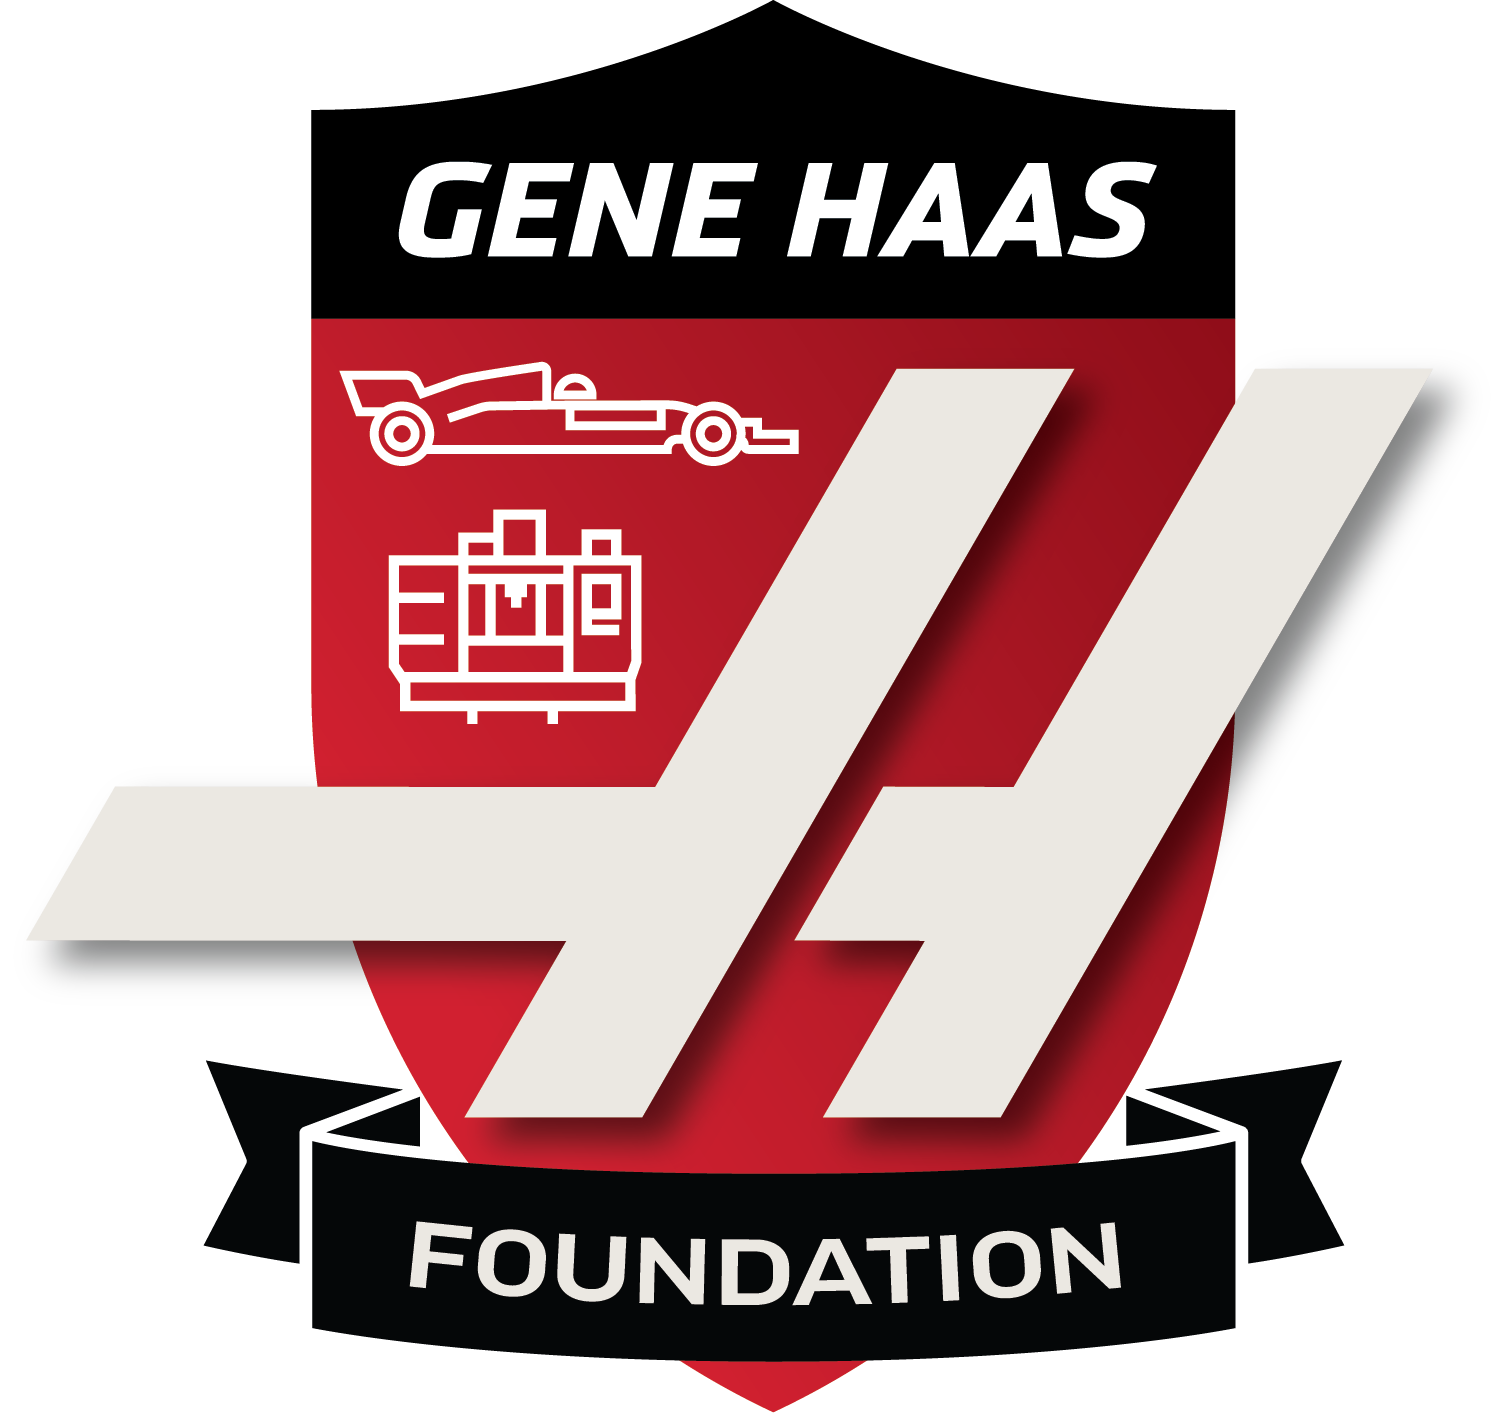 The Gene Haas Foundation